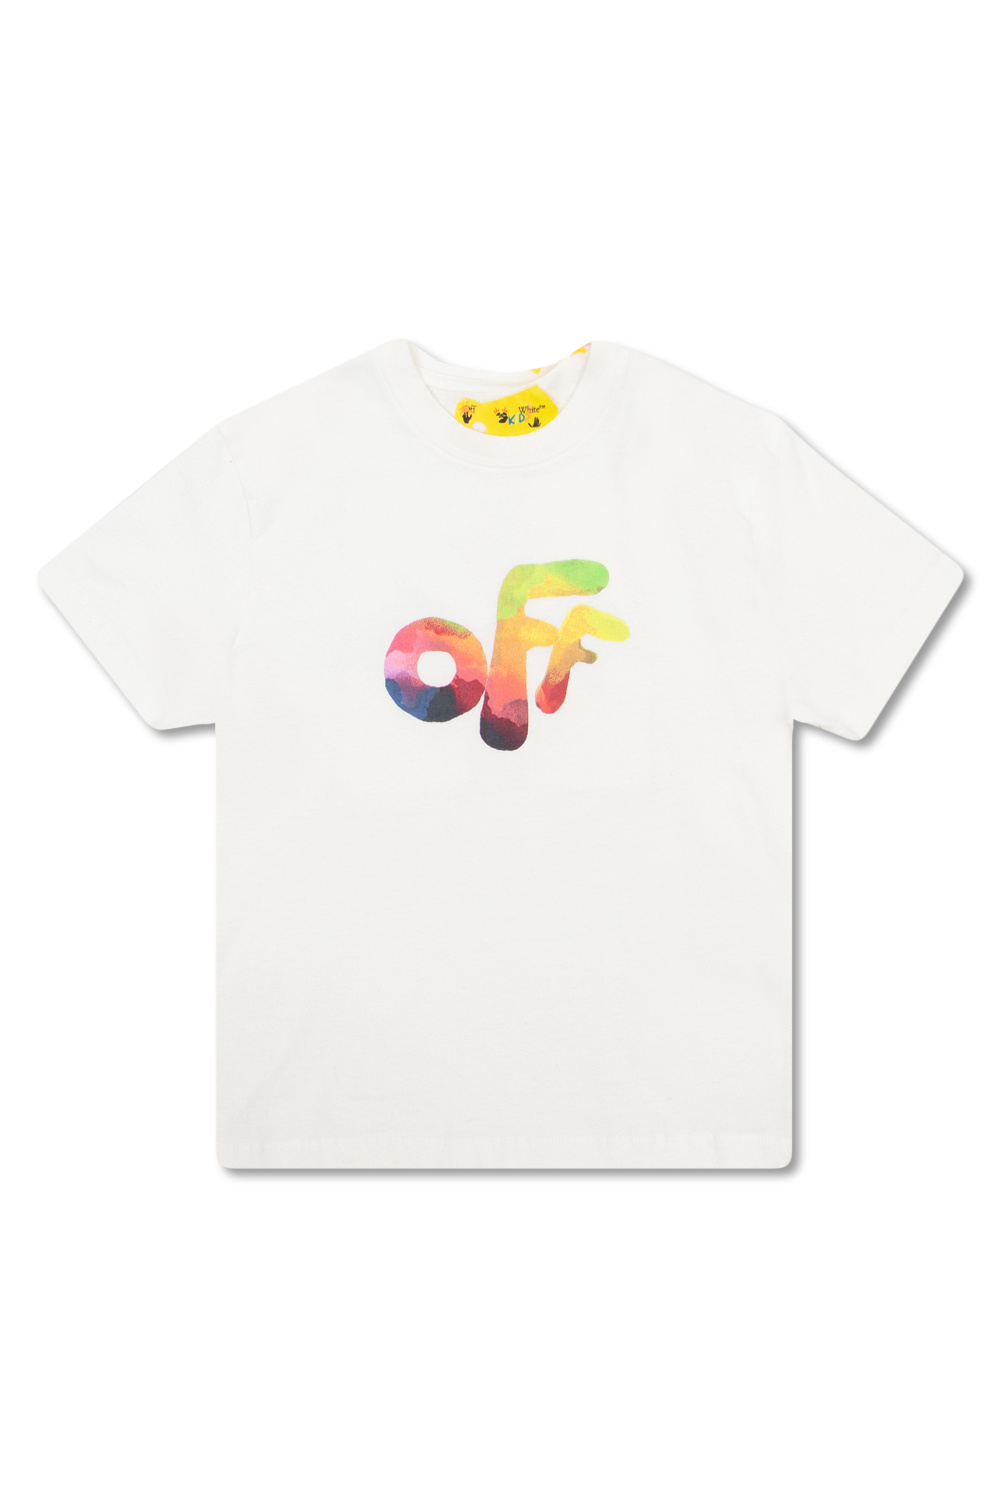 Off-White Kids logo-print T-shirt - Black